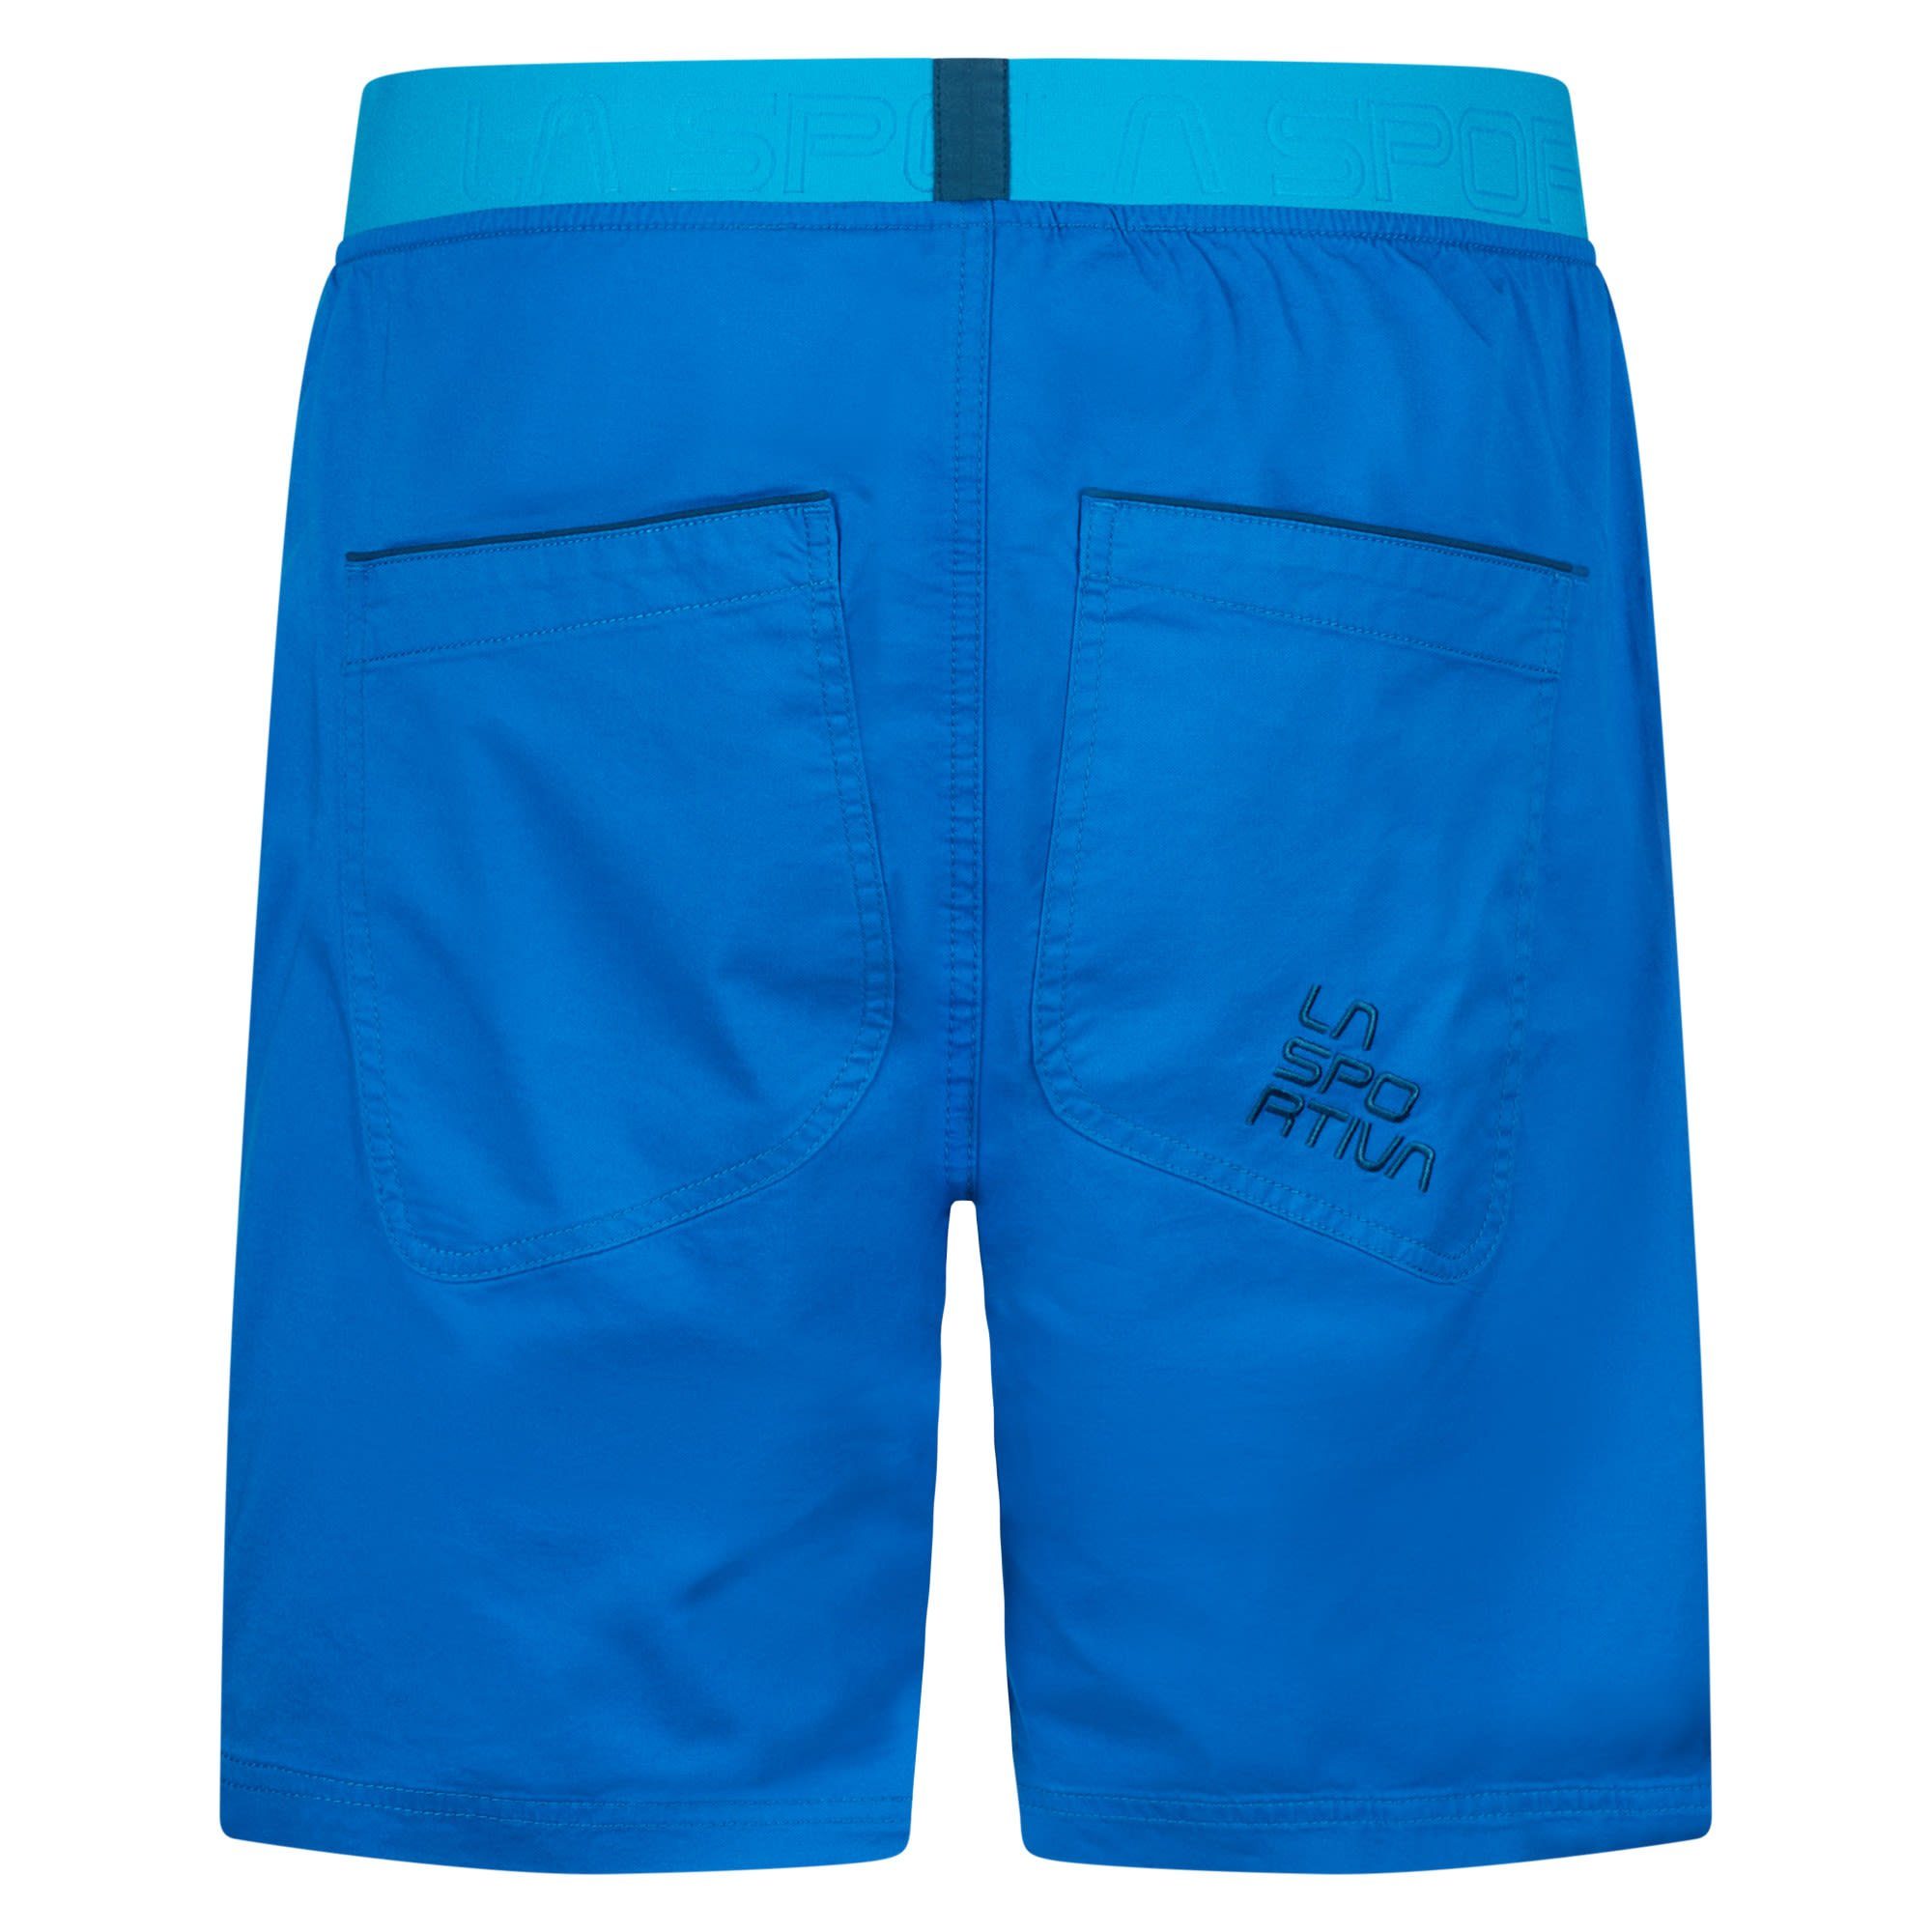 Sportiva Electric Sportiva Herren La Strandshorts Esquirol Short Blue - Shorts Maui M La